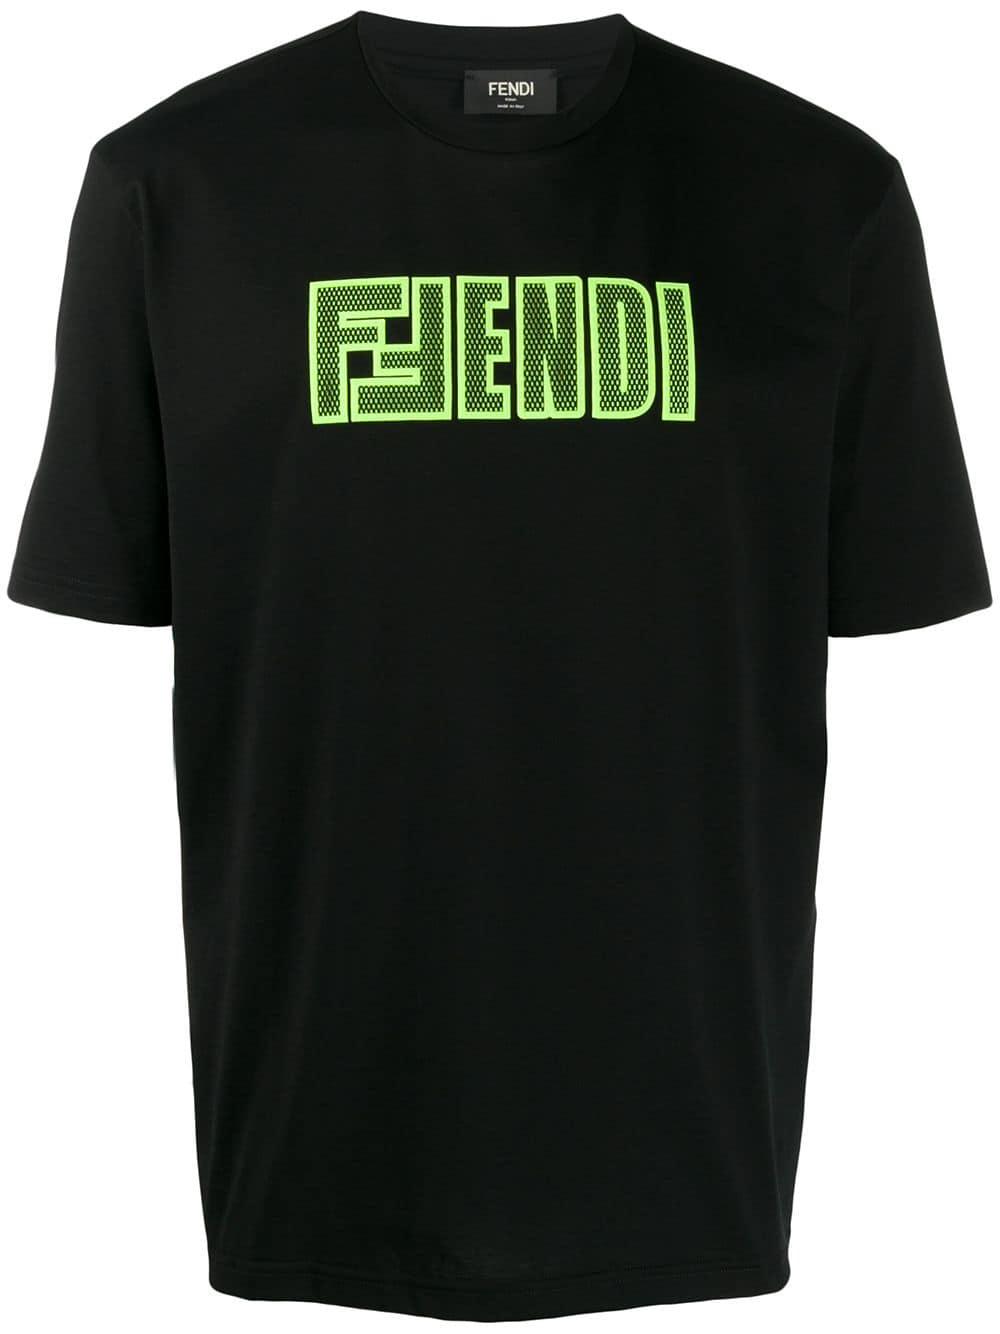 Fendi Cotton Logo Patch T-shirt in Black for Men - Lyst